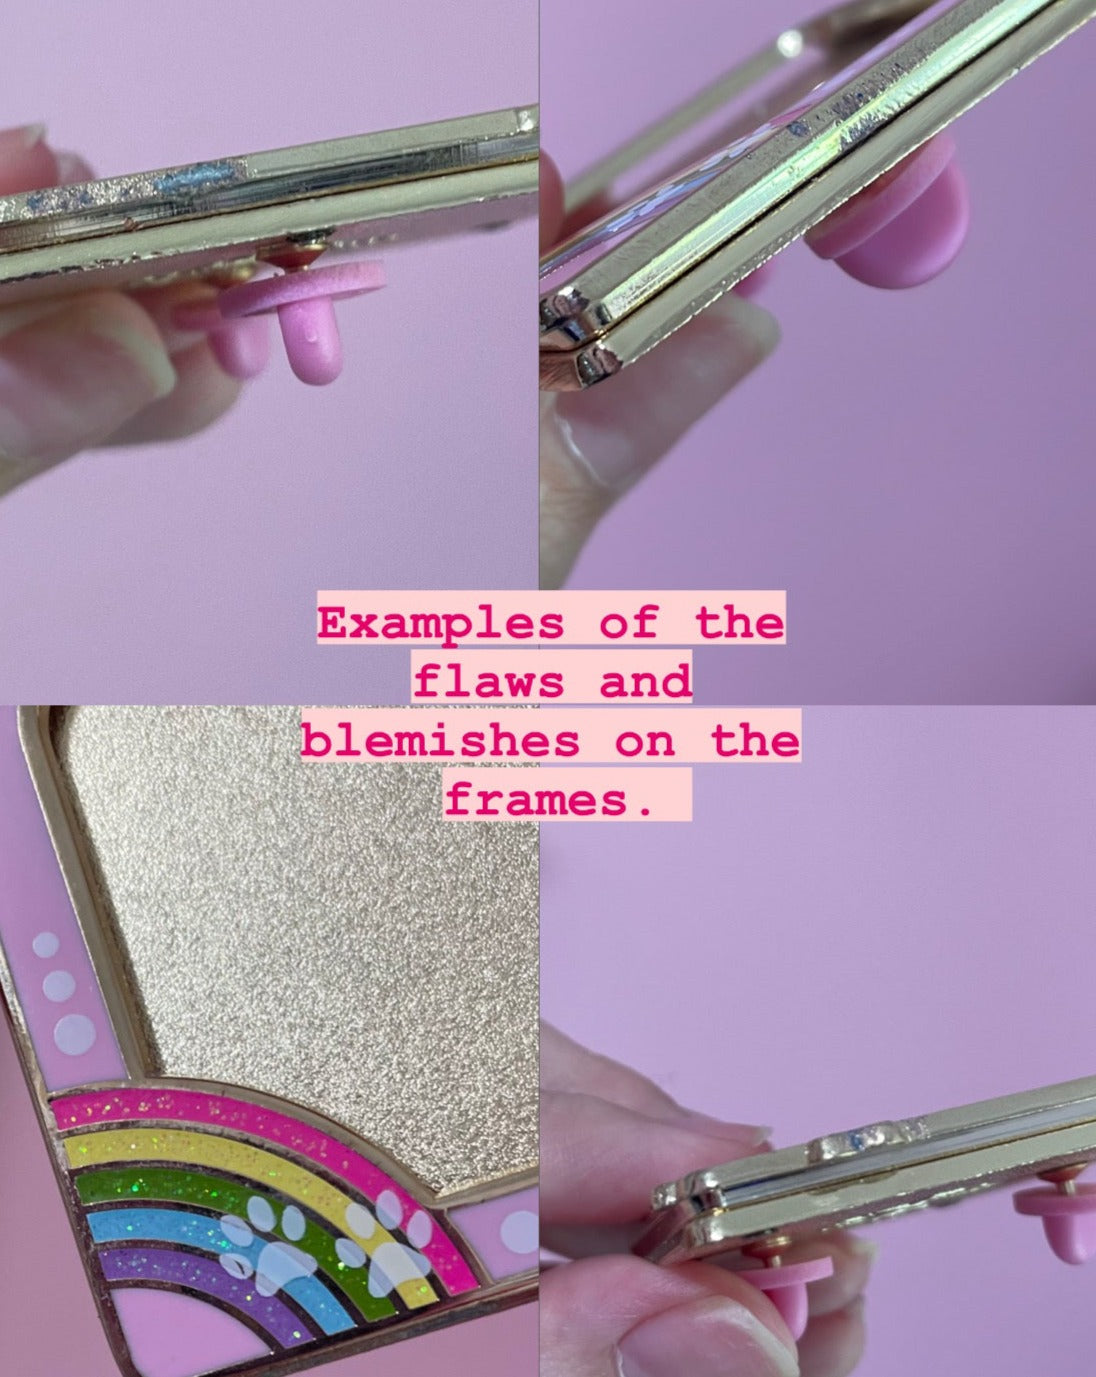 Mini Enamel Photo Frame Pin or Magnet